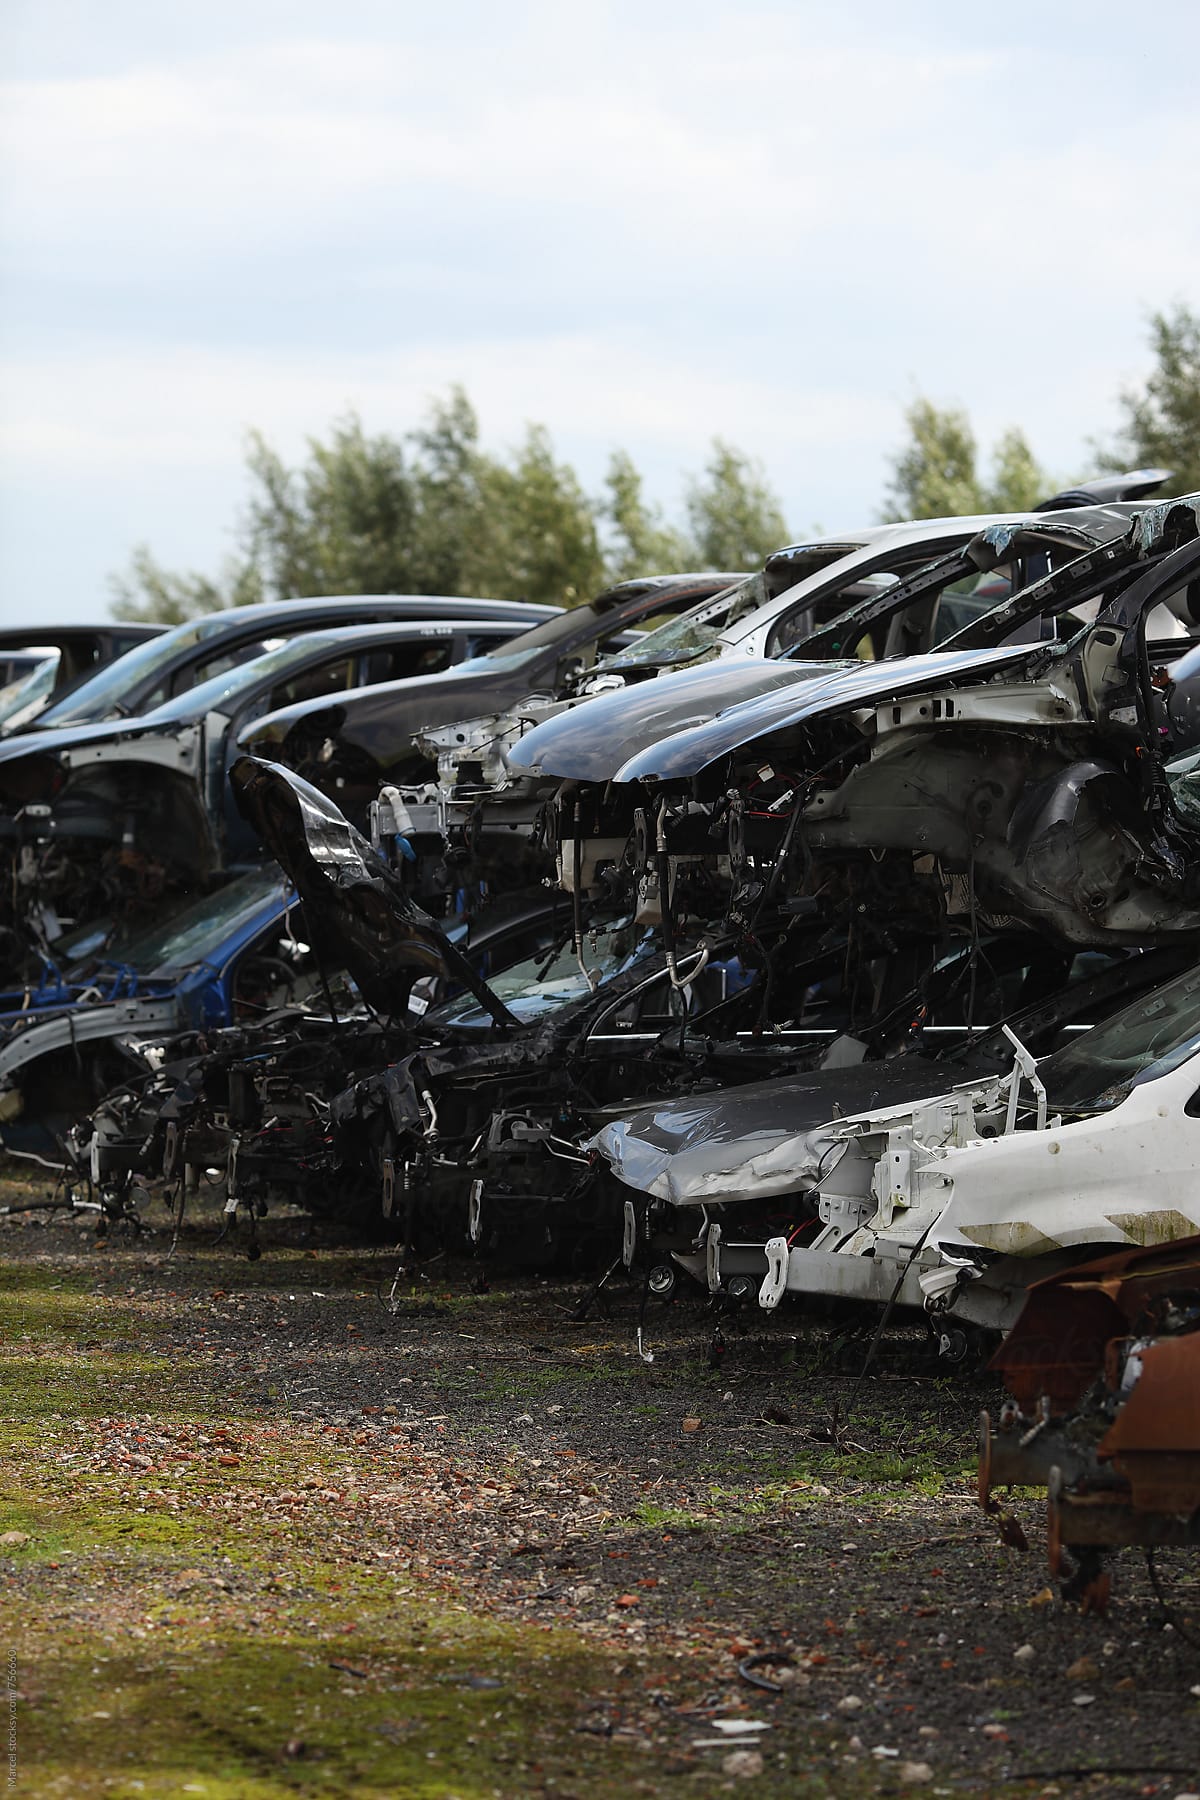 Wrecked cars piled up, at a acar scrapyard